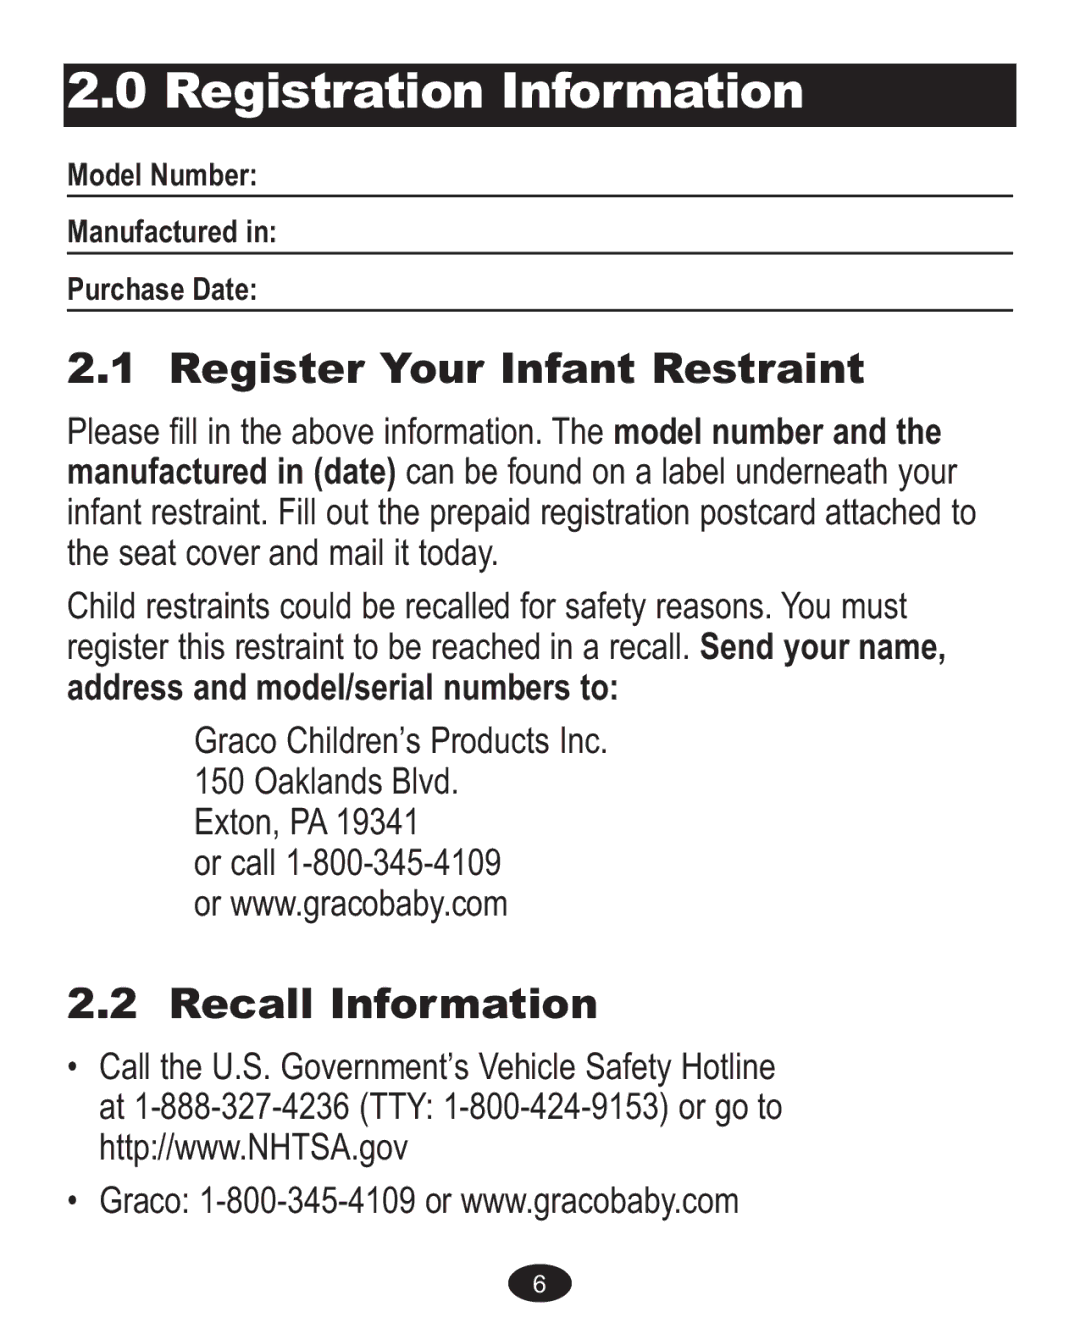 Graco PD159939A owner manual Registration Information, Register Your Infant Restraint, Recall Information 